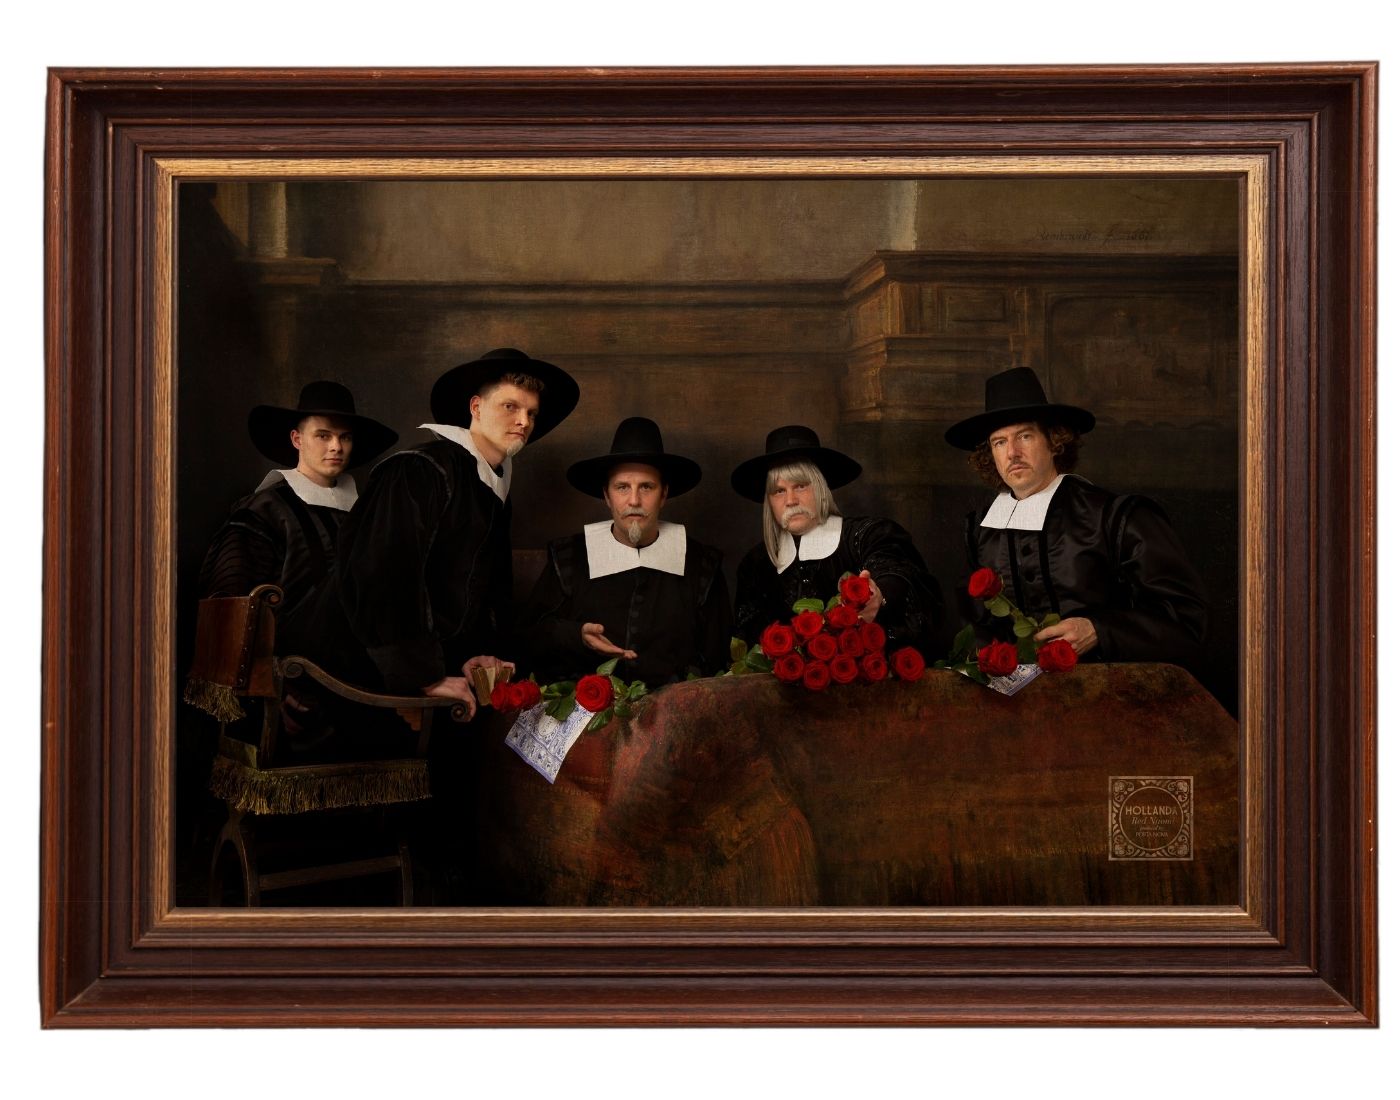 Hollanda roses by Porta Nova - on Thursd. Old master 2